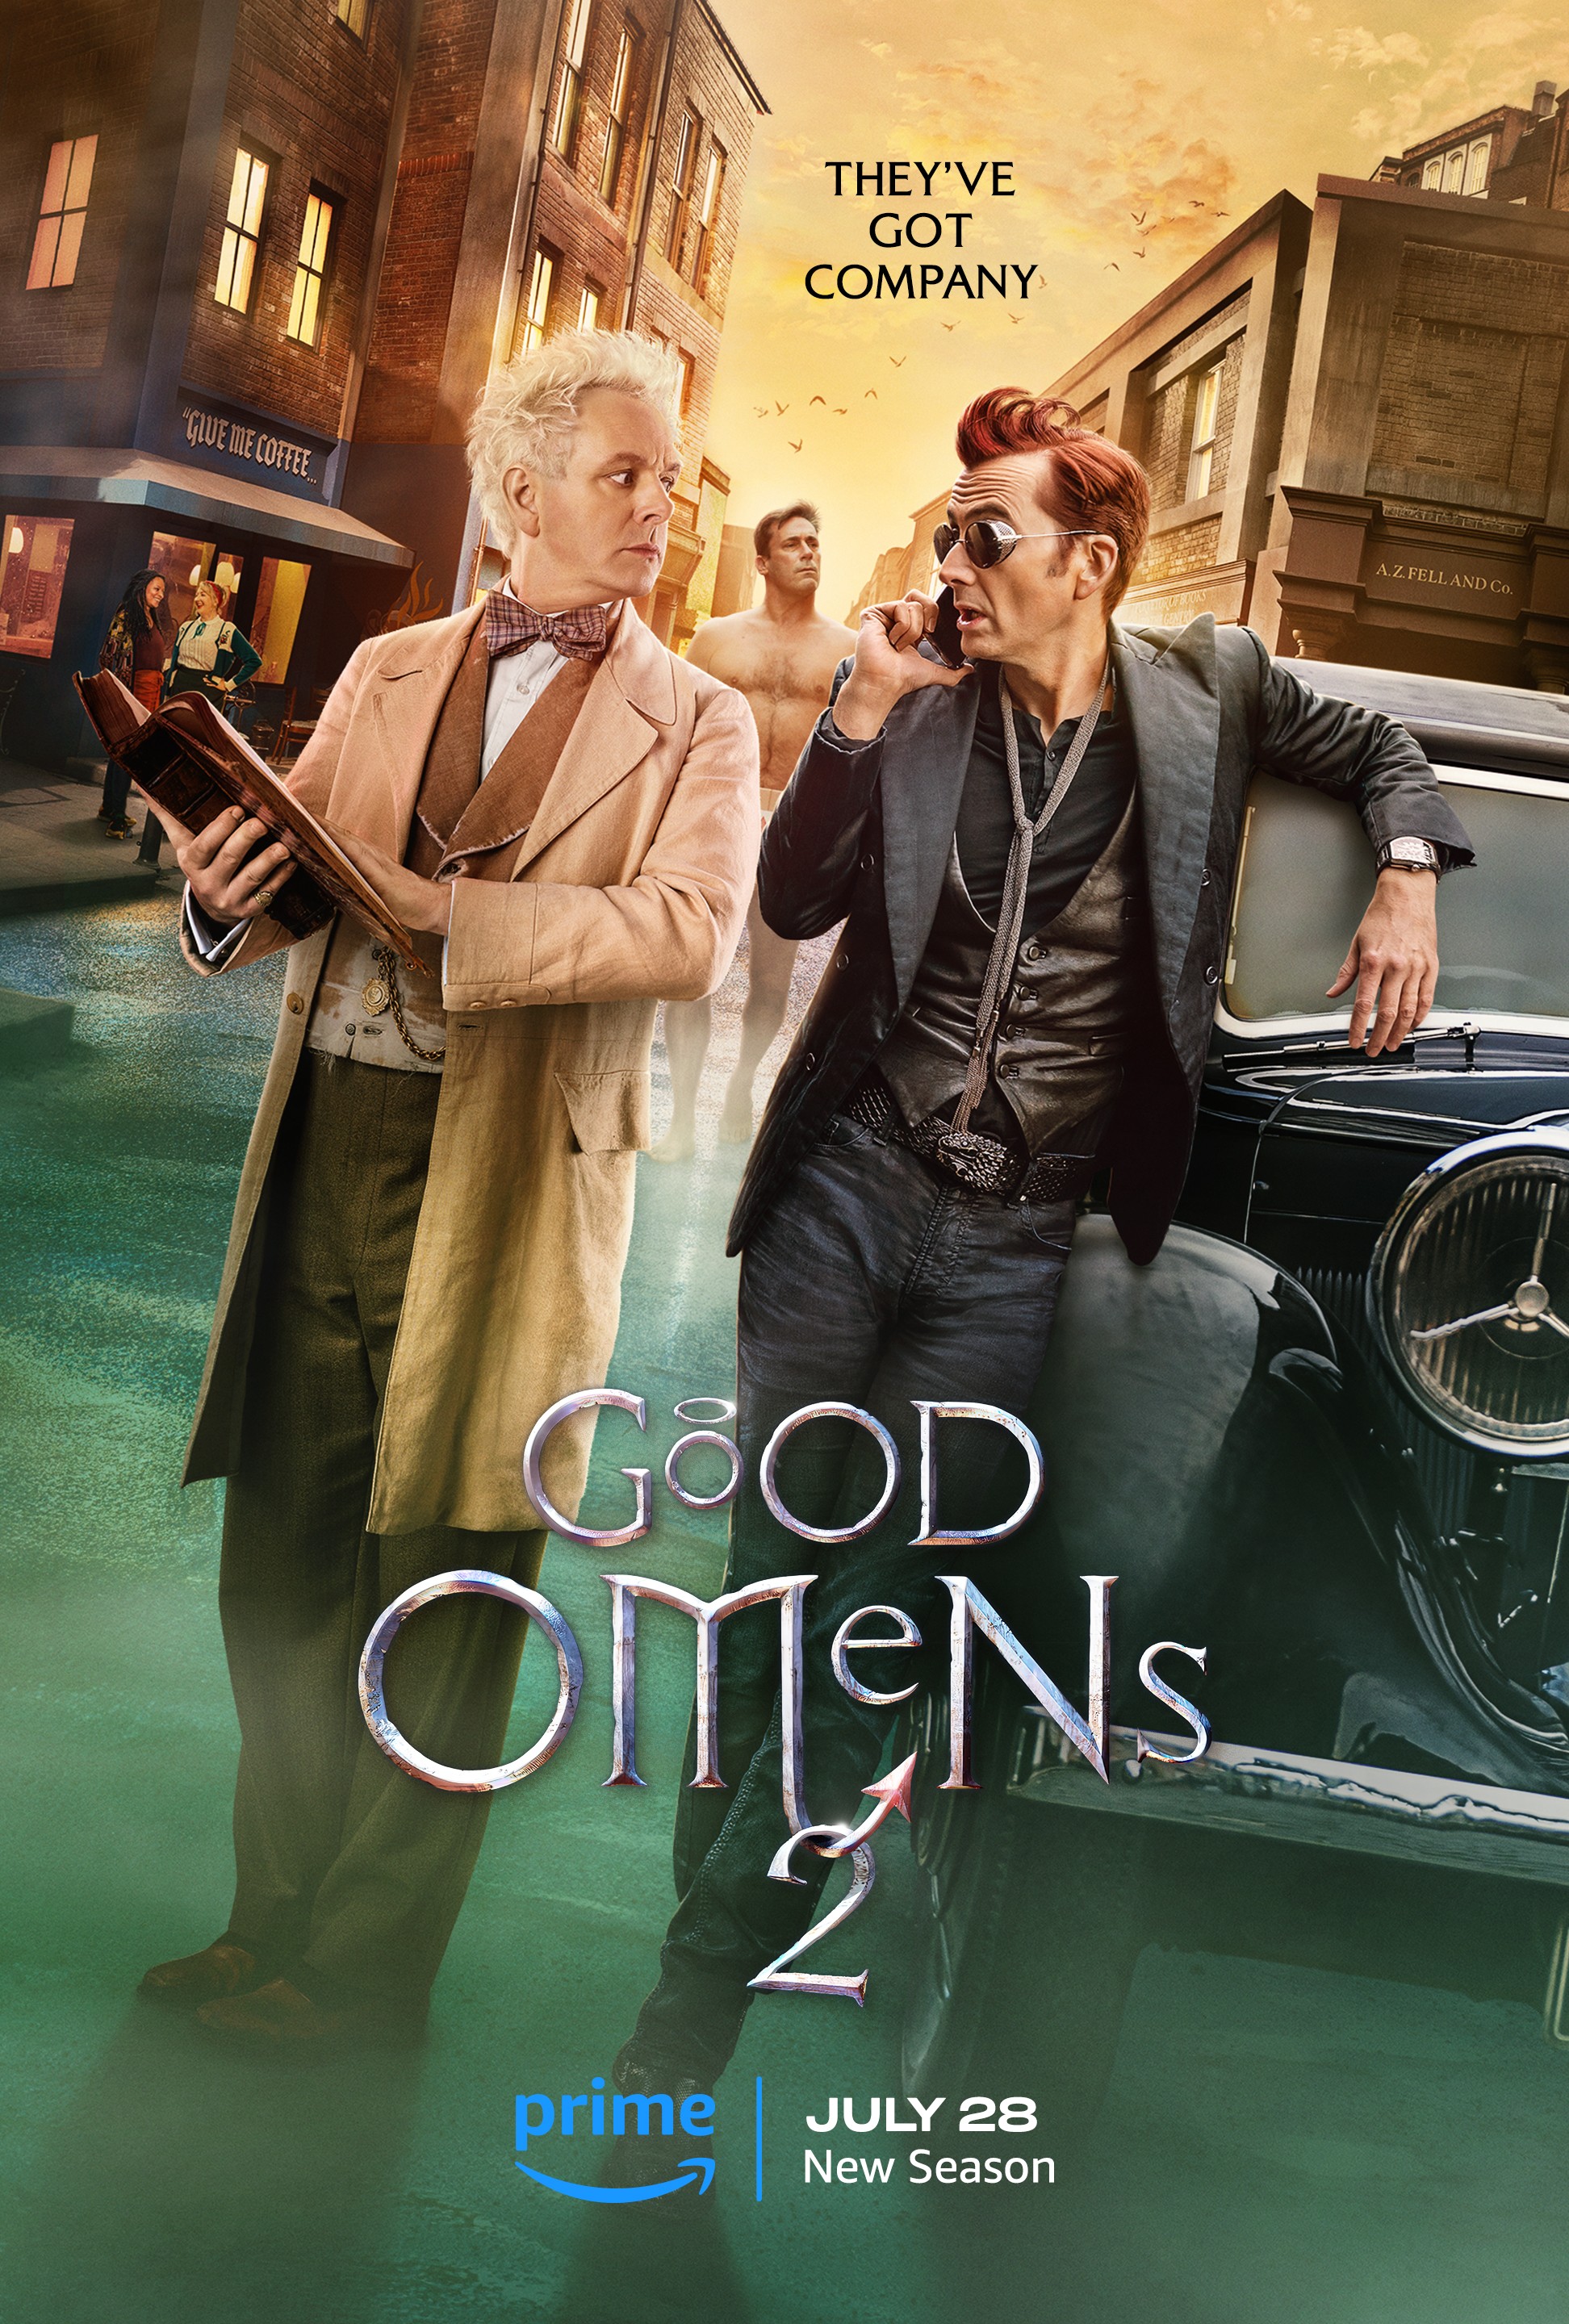 Good Omens' season 2 still has its charm despite lesser story, Movie  Reviews